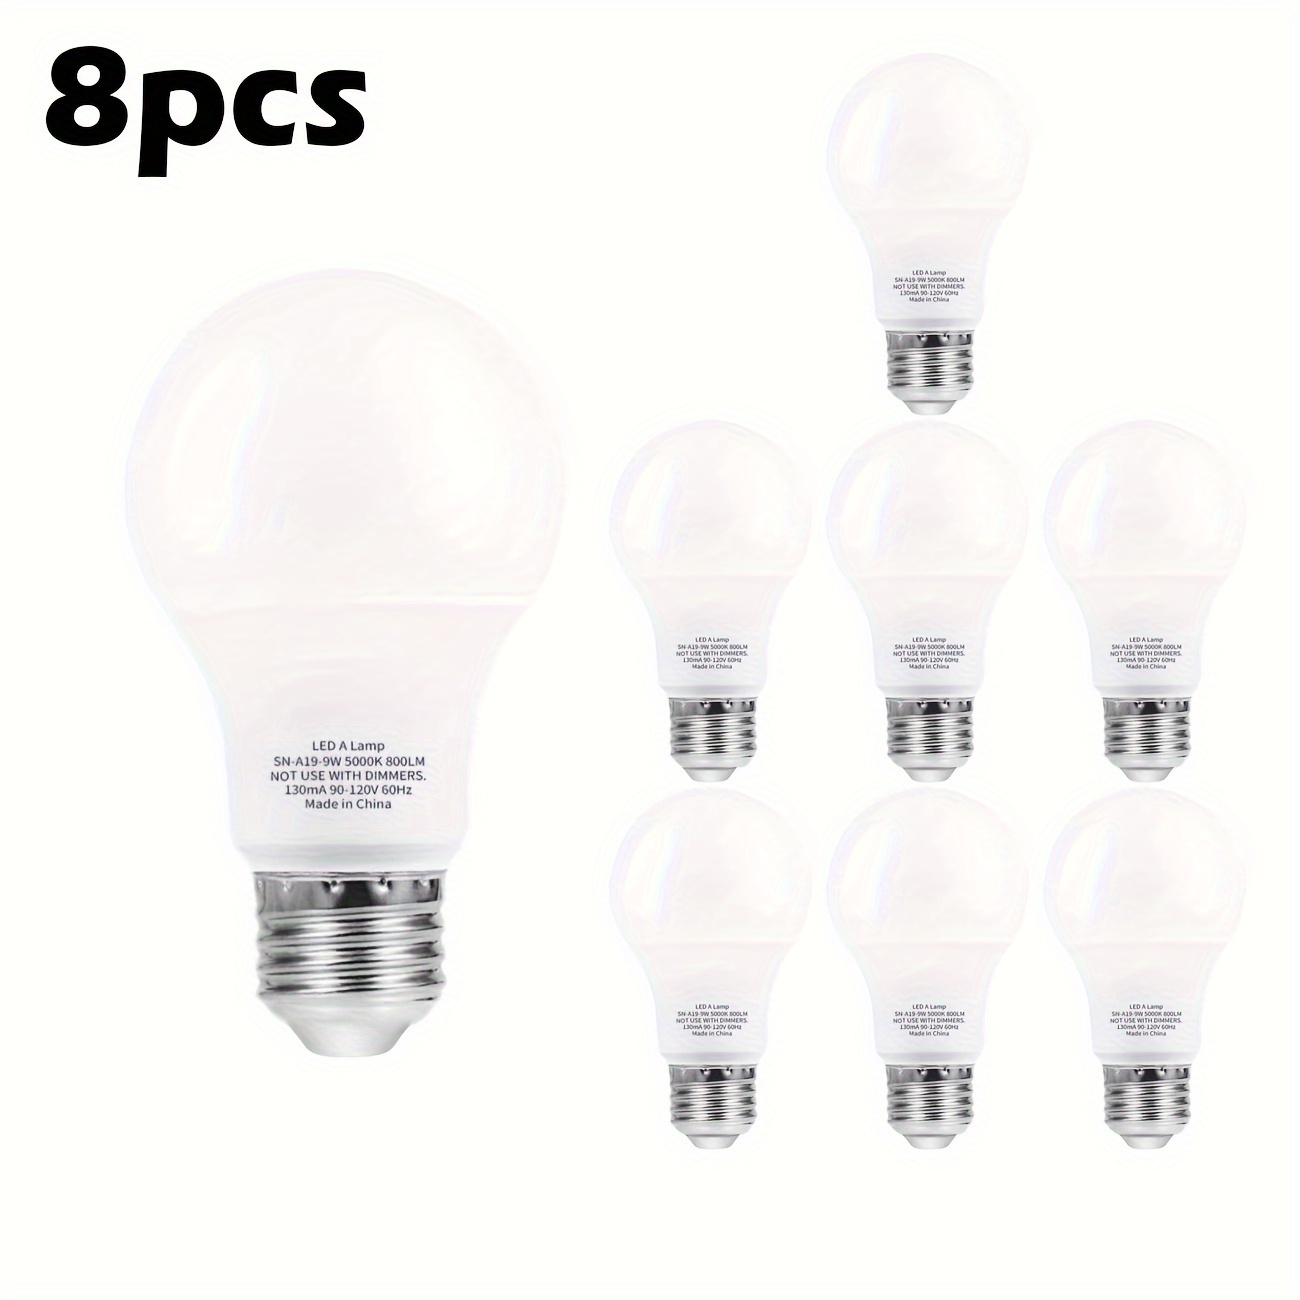 Bombilla LED T10, intensidad regulable, 6 W, luz blanca suave de 3000 K,  equivalente a bombilla incandescente de 60 W, blanco suave de 3000 K,  cristal transparente, bombilla de base E26, para